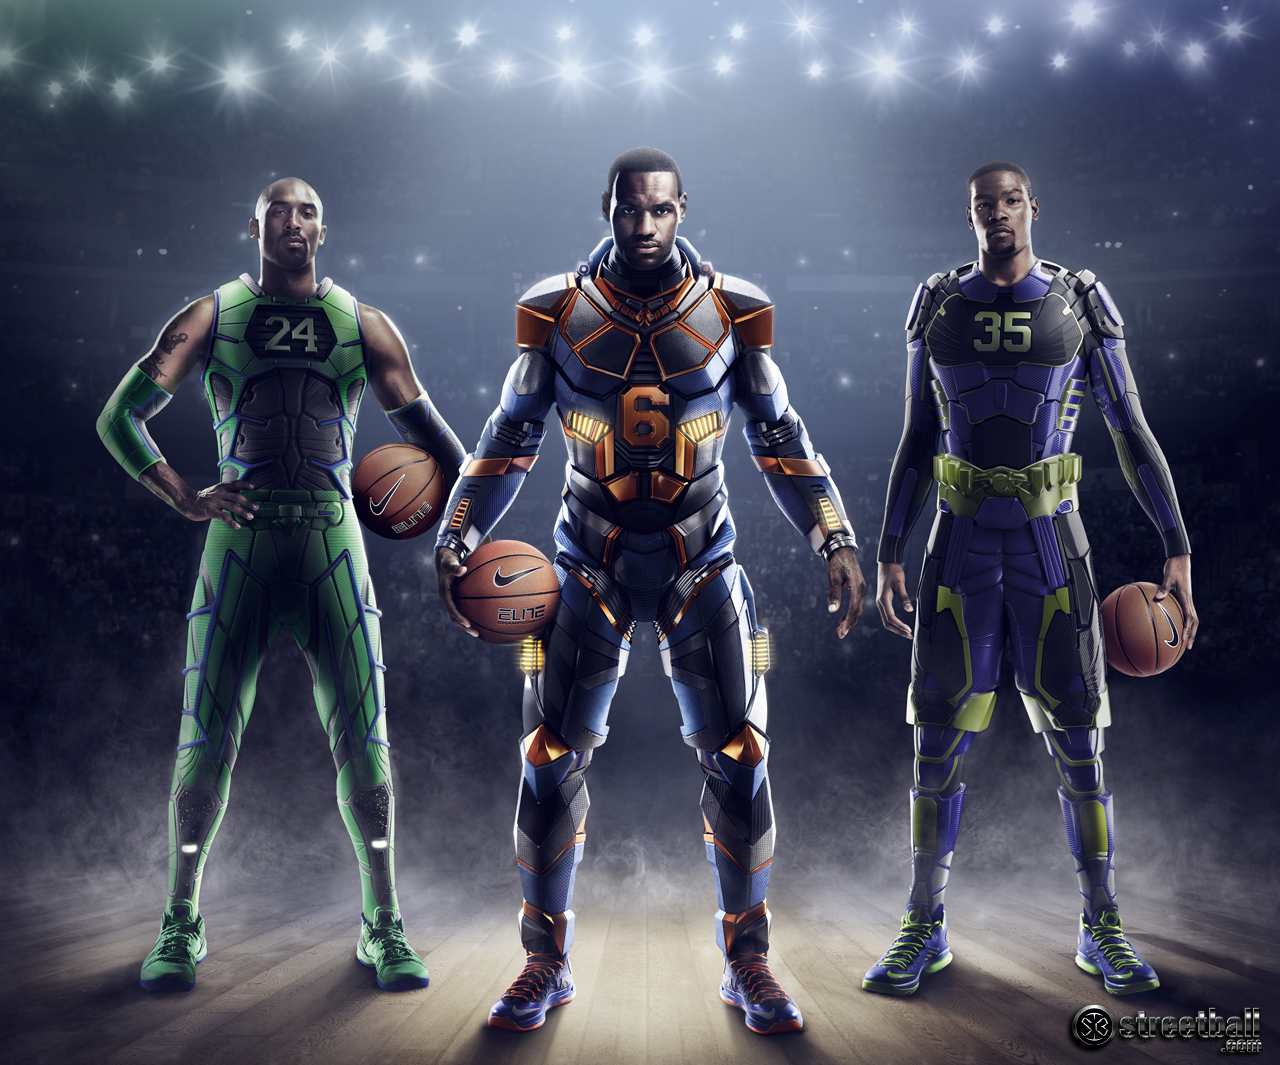 Nike Basketball Kobe Bryant Lebron James Kevin Durant